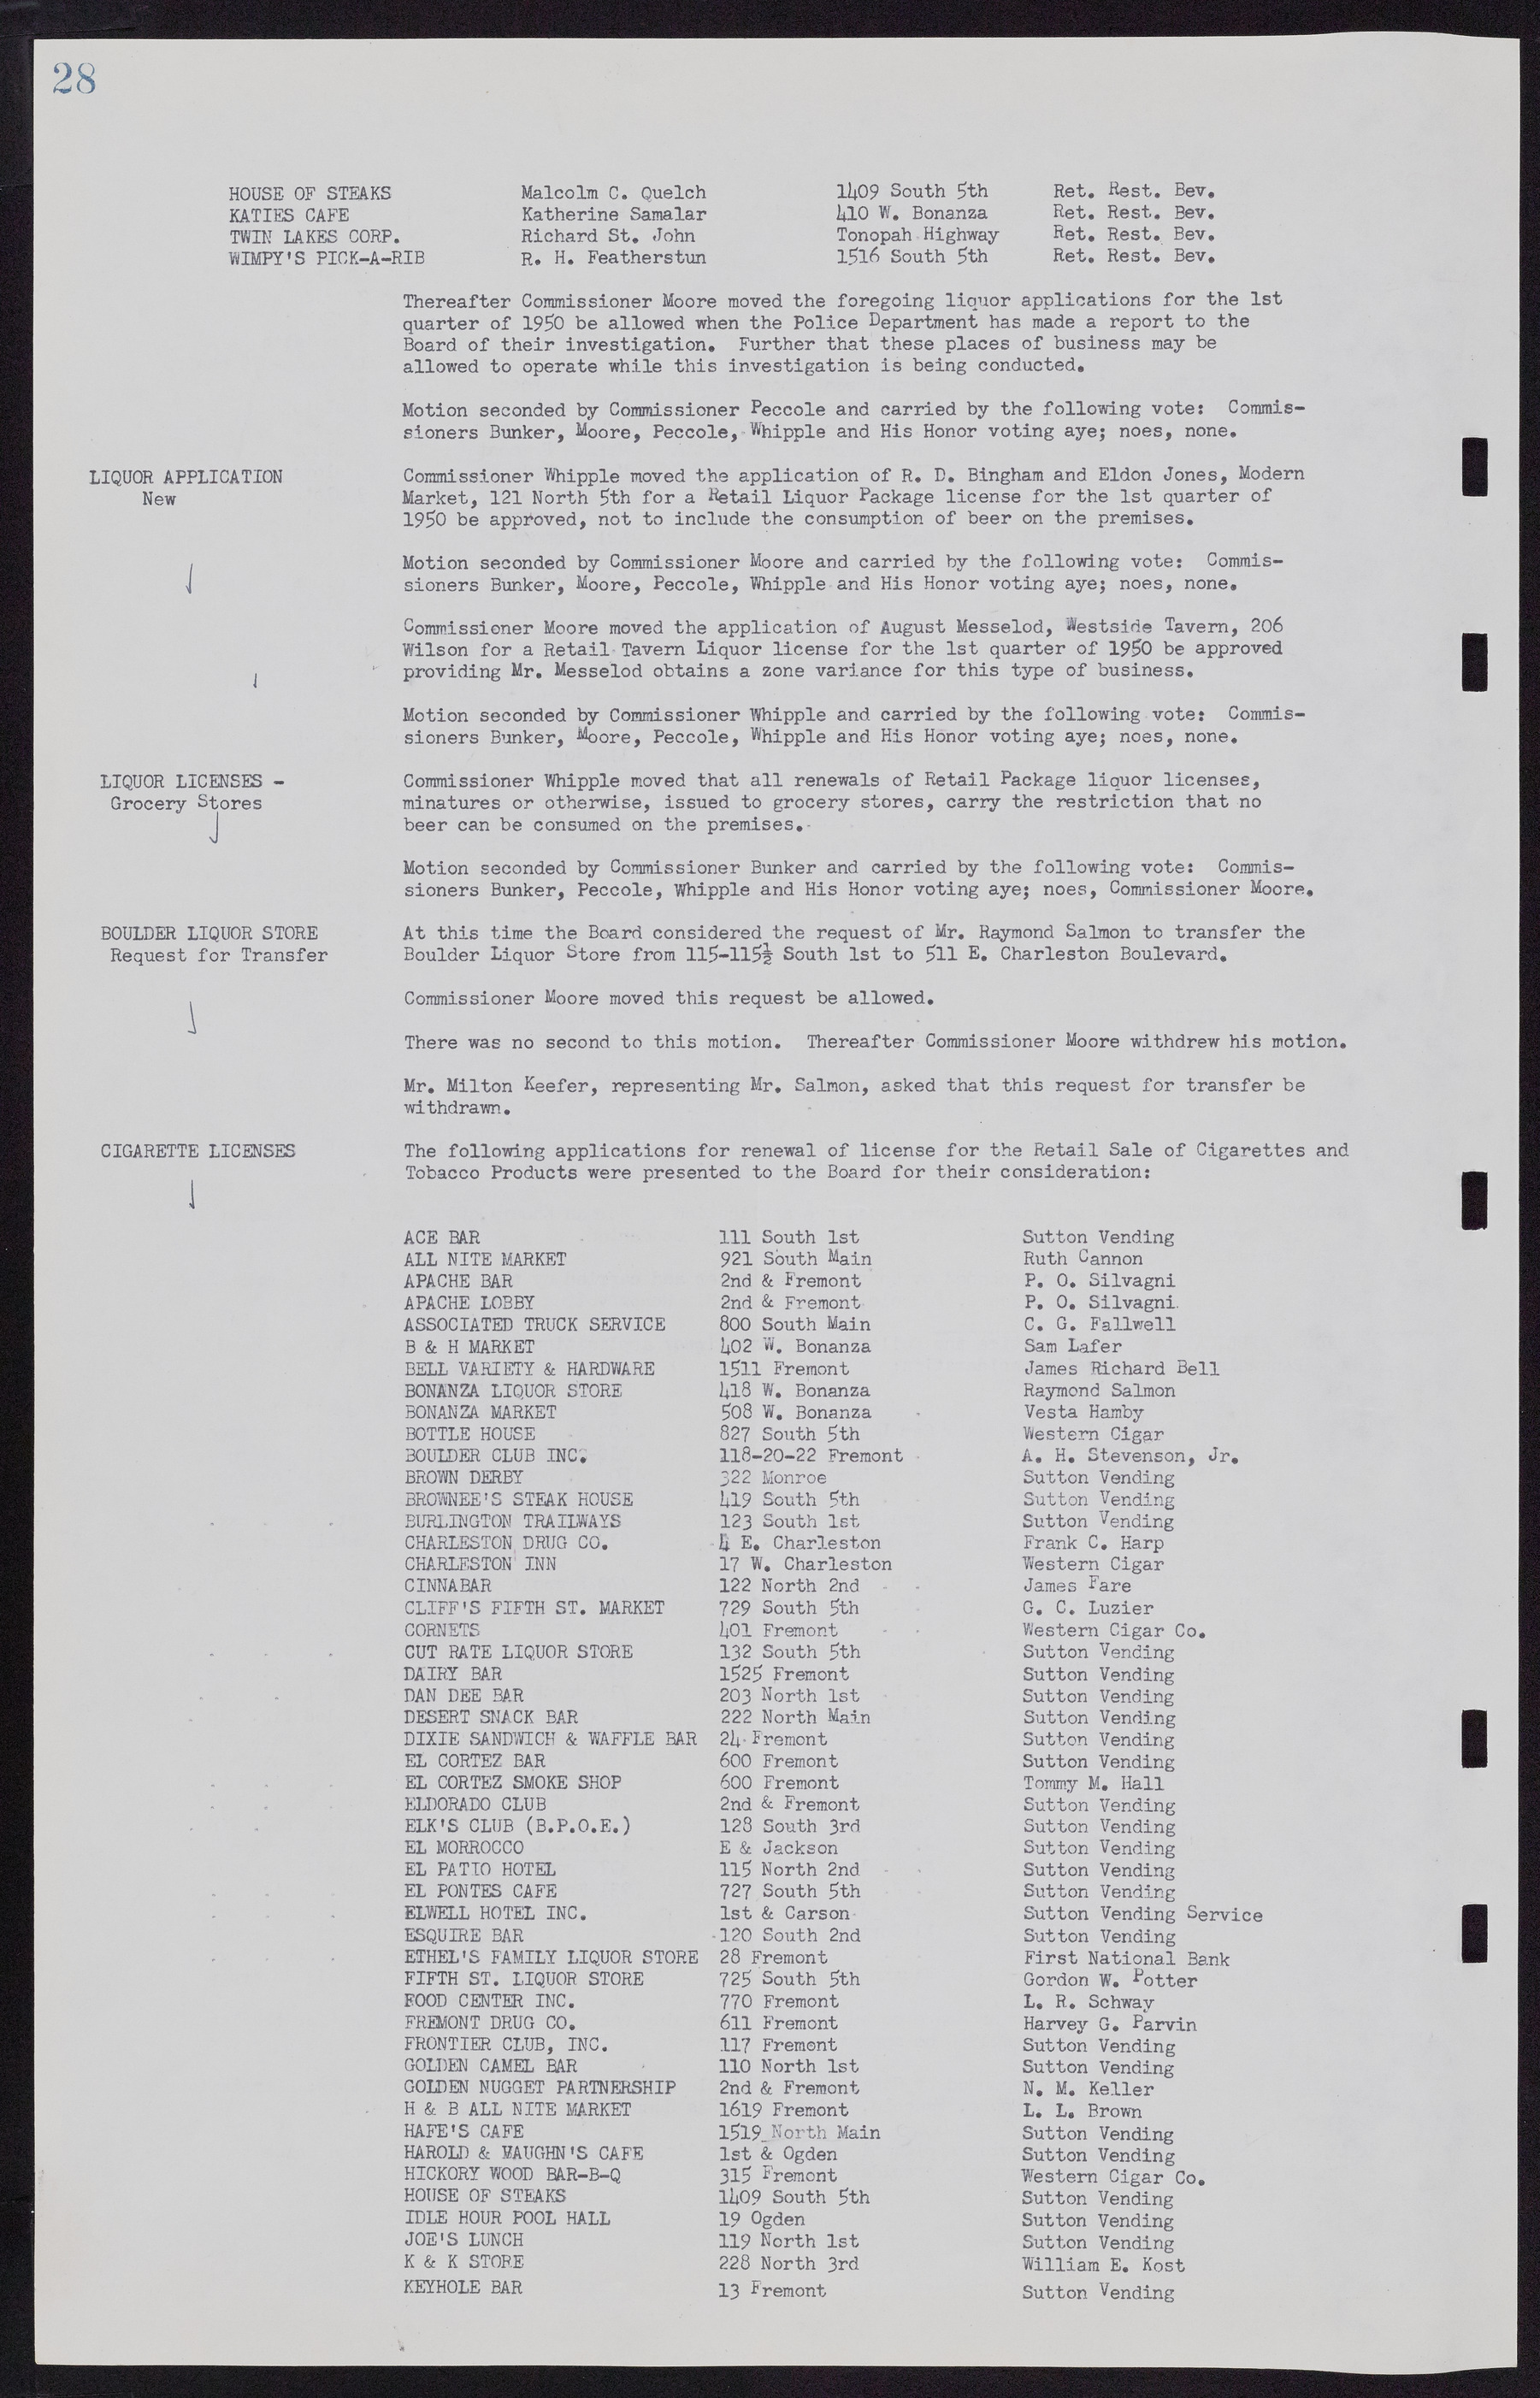 Las Vegas City Commission Minutes, November 7, 1949 to May 21, 1952, lvc000007-36